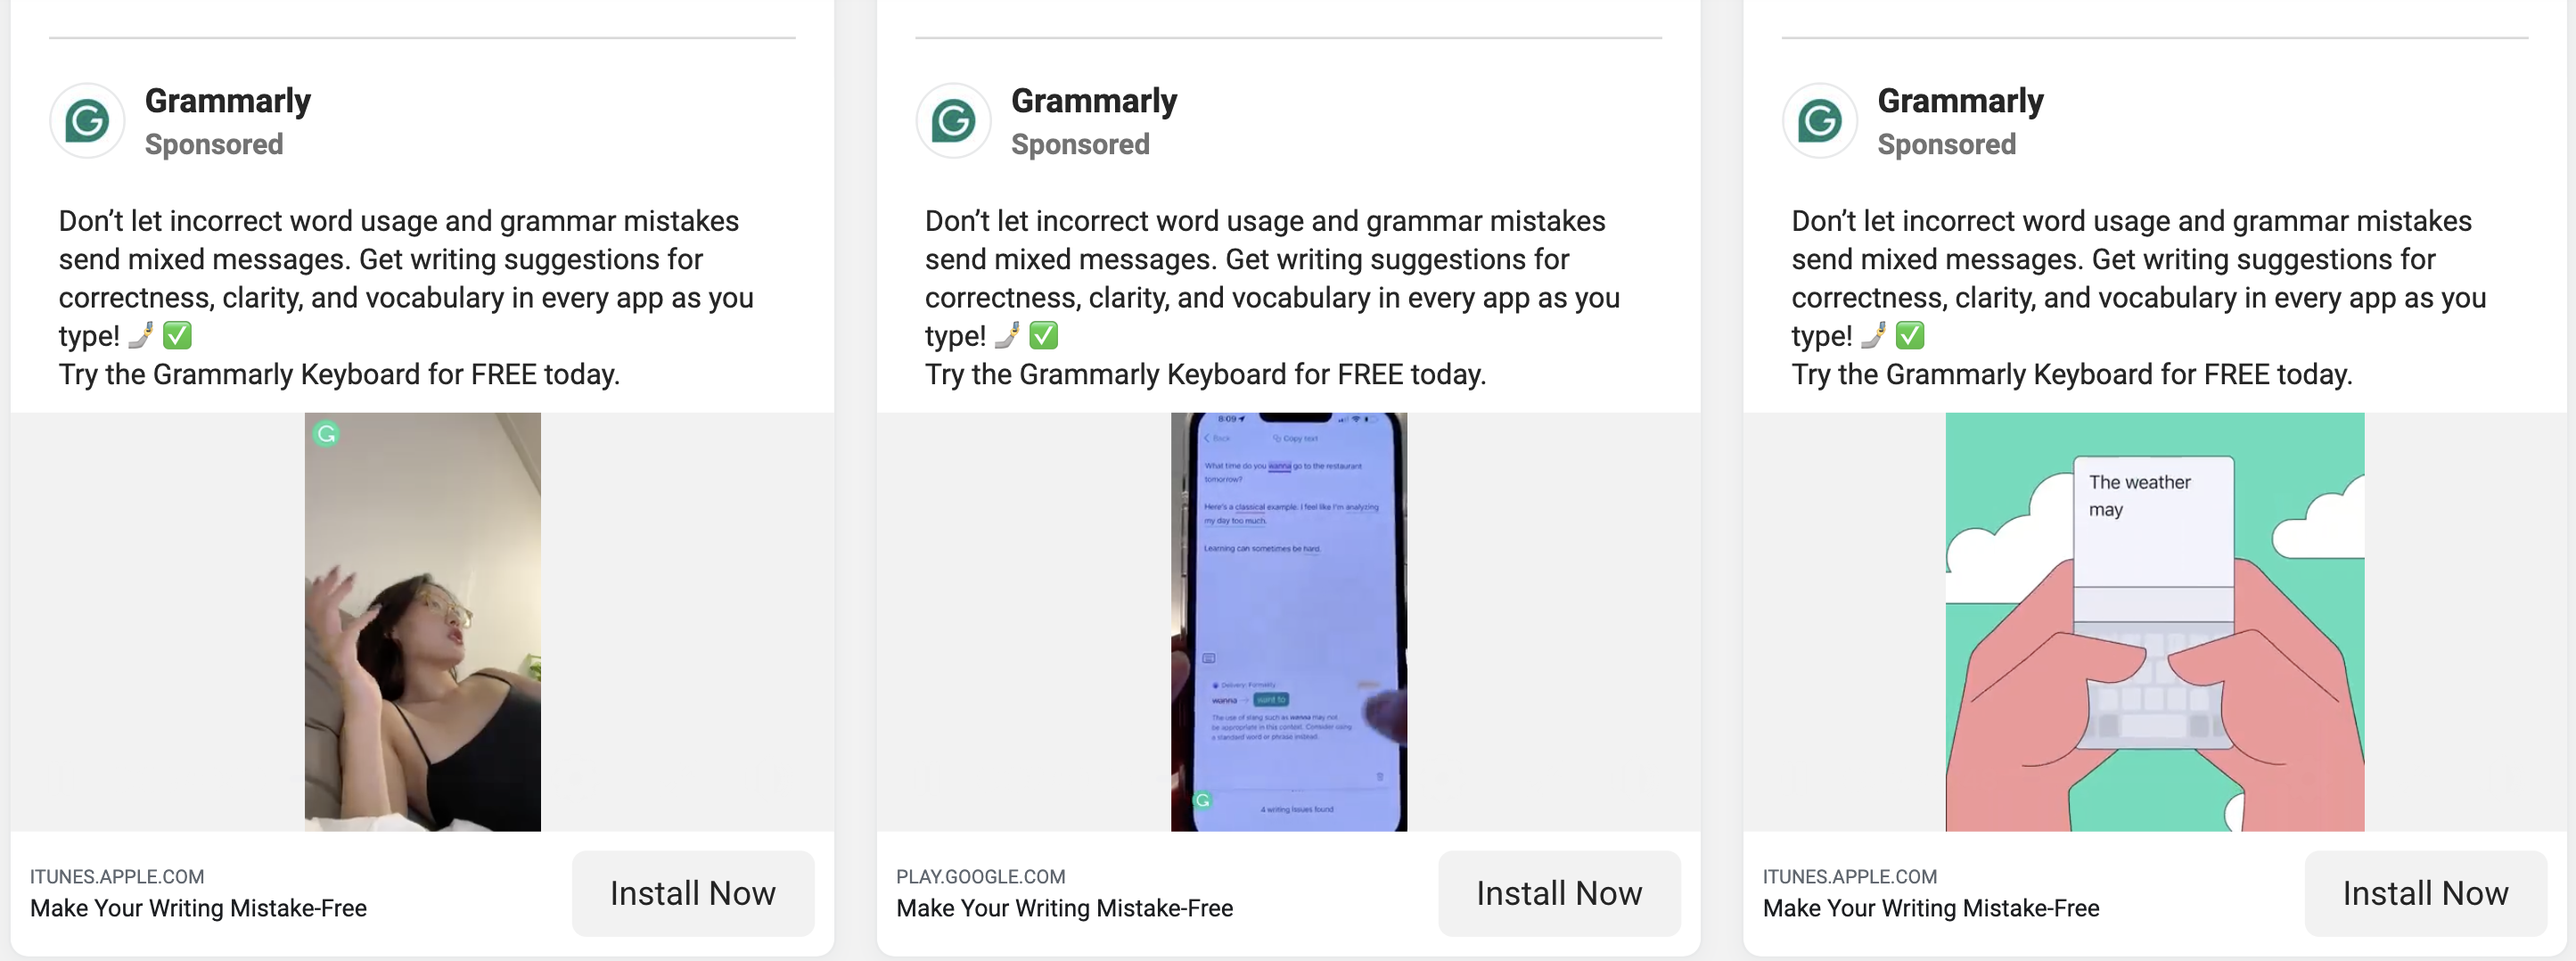 Grammarly Facebook Video Ad